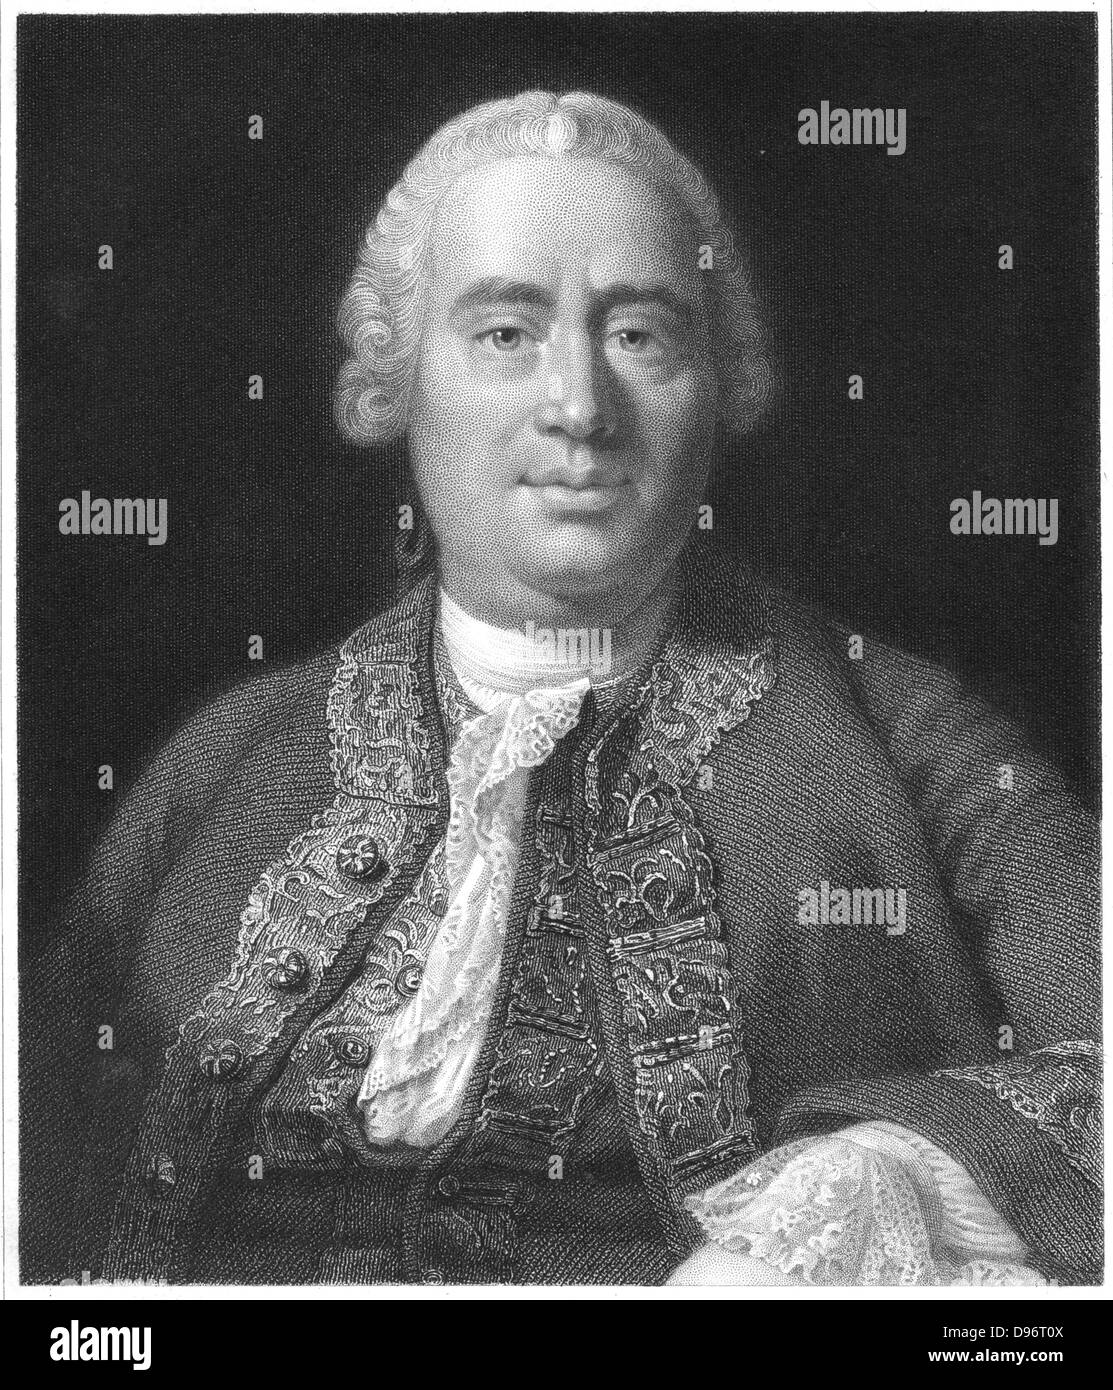 David Hume (1771-1776) Scottish philosopher and historian. Portrait engraving. Stock Photo